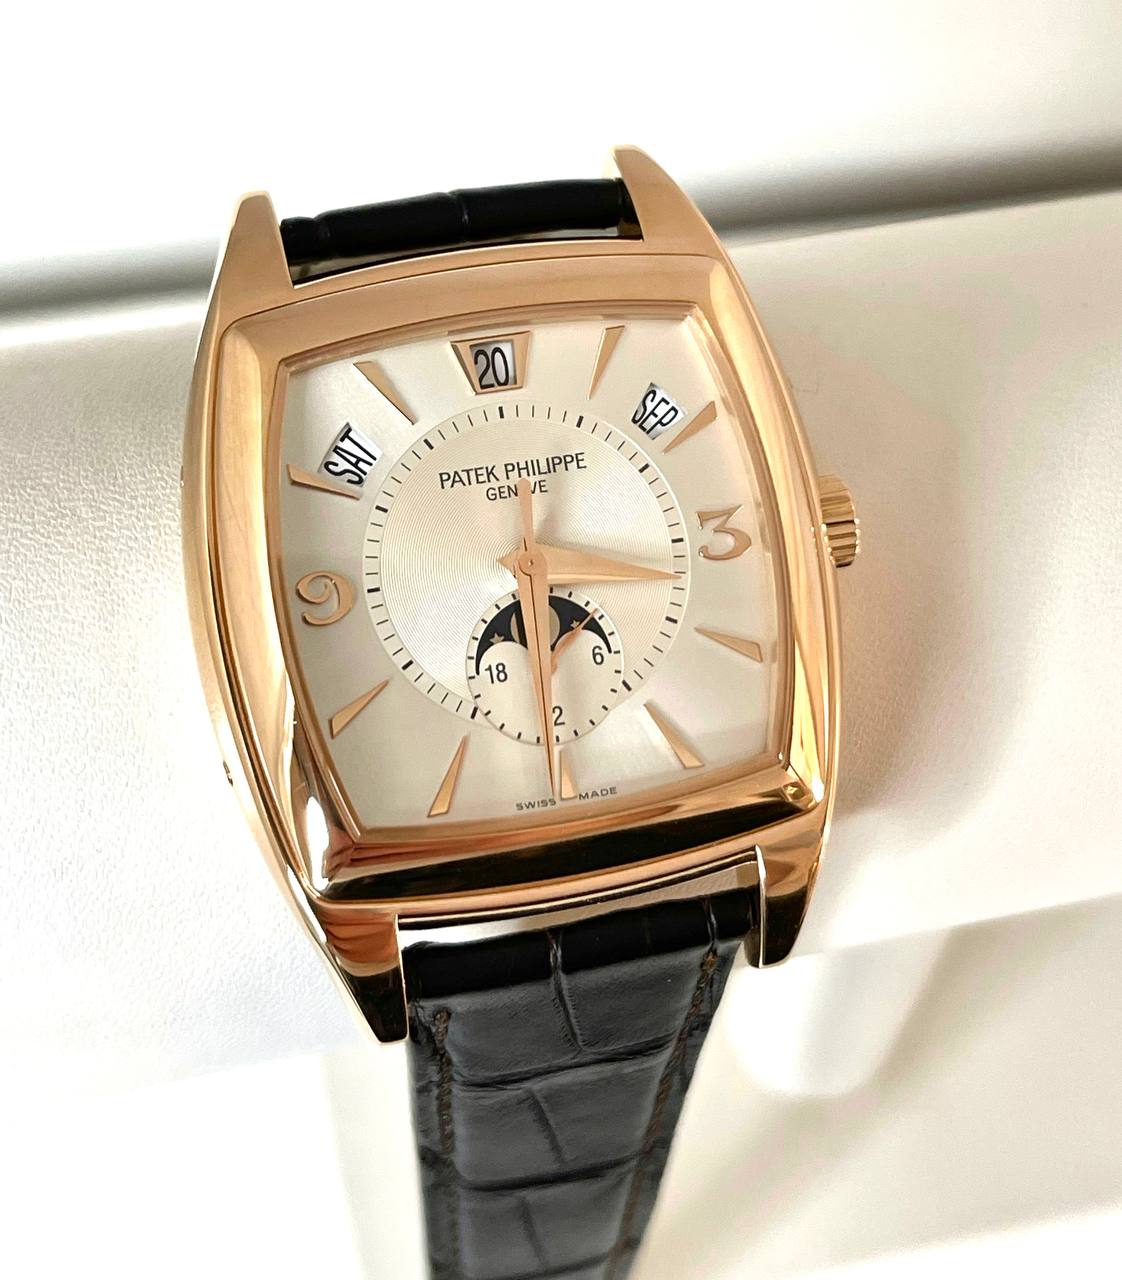 Часы Patek Philippe Complicated Watches 5135R-001